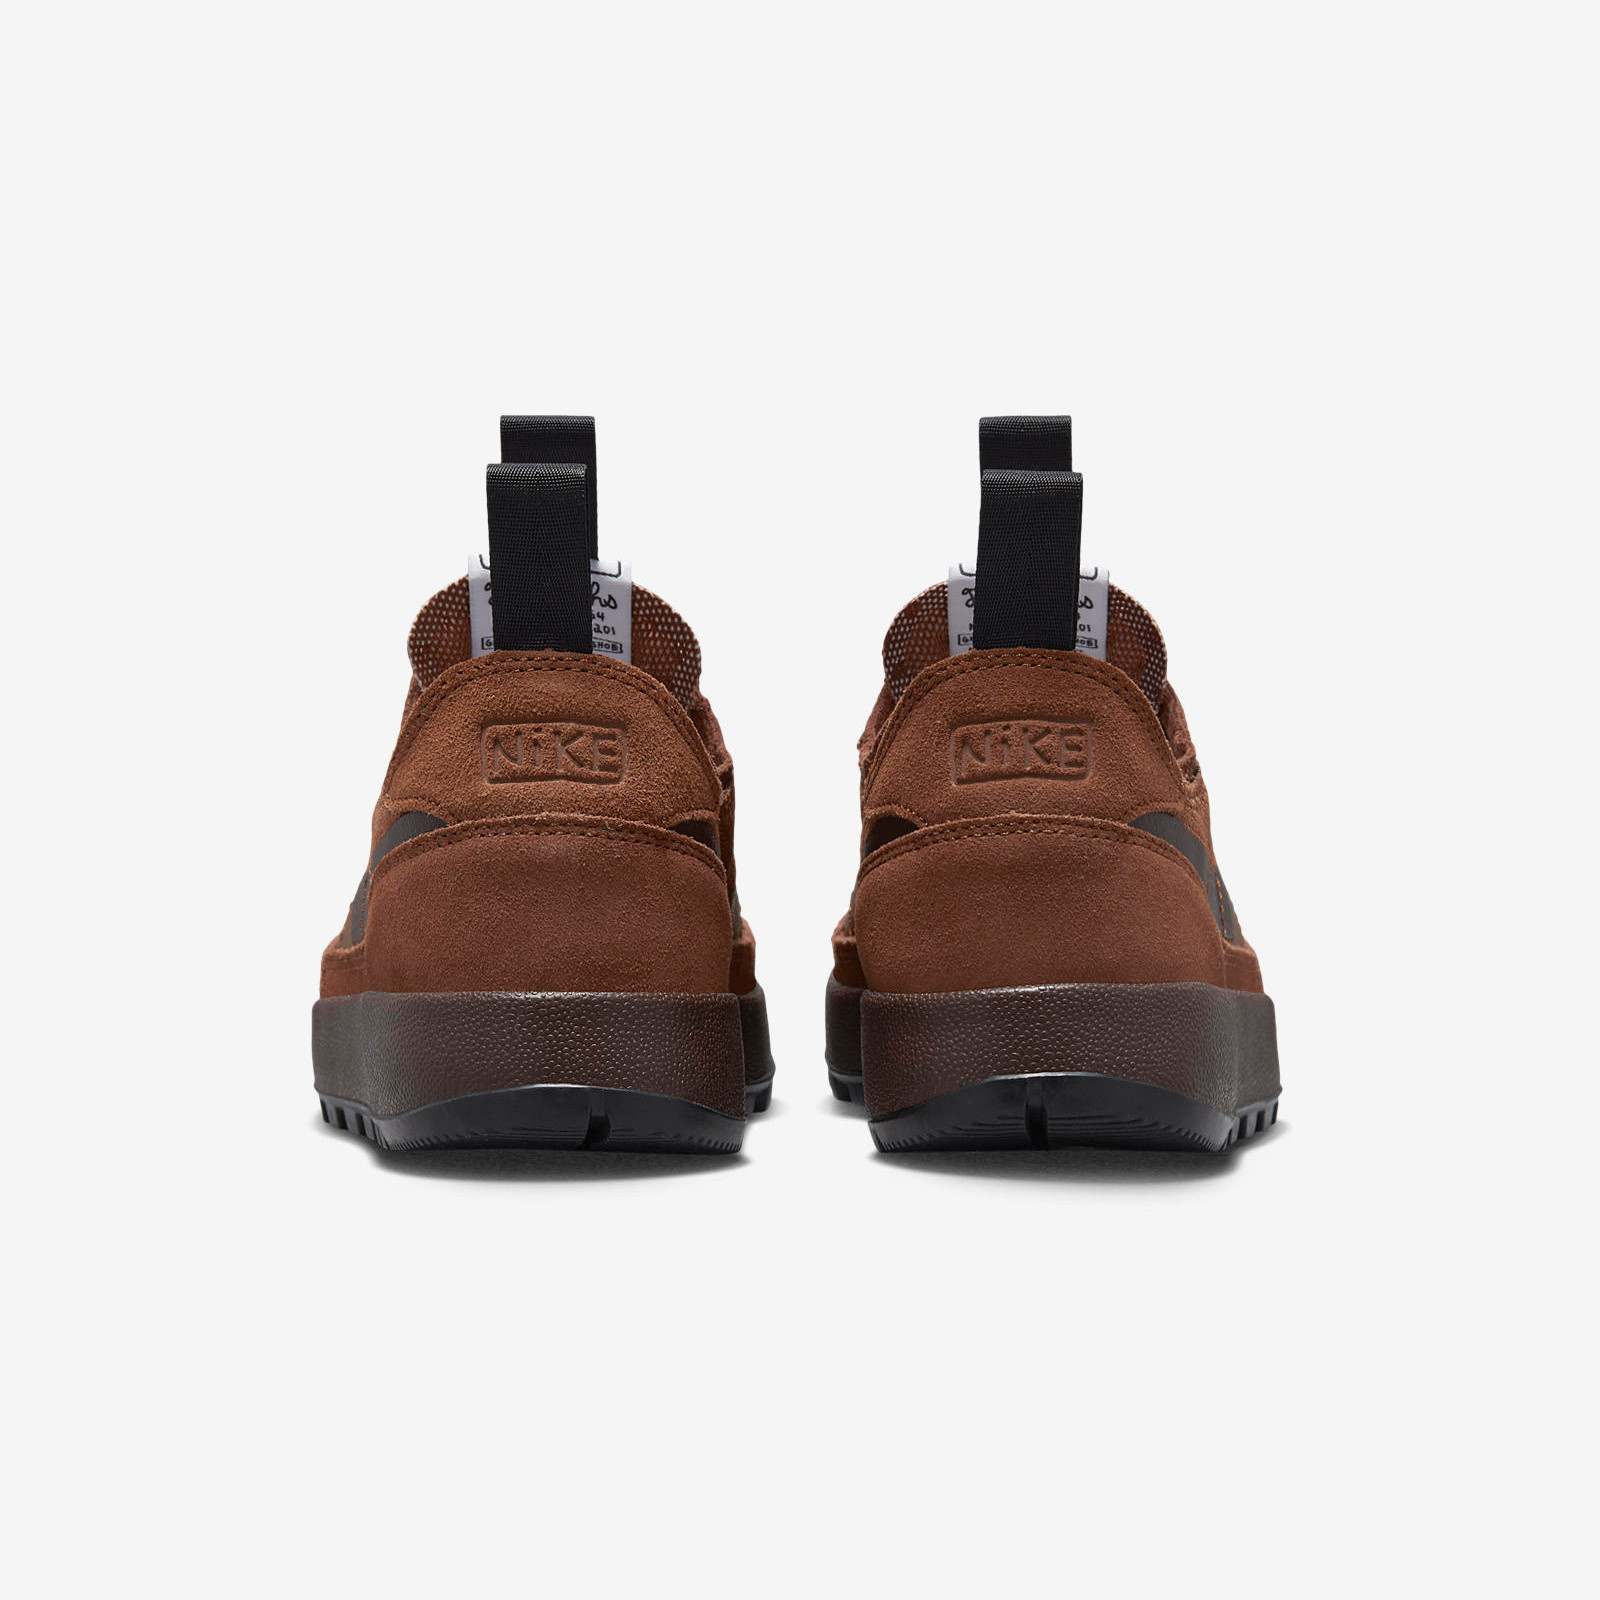 Tom Sachs x NikeCraft
General Purpose Shoe
Brown